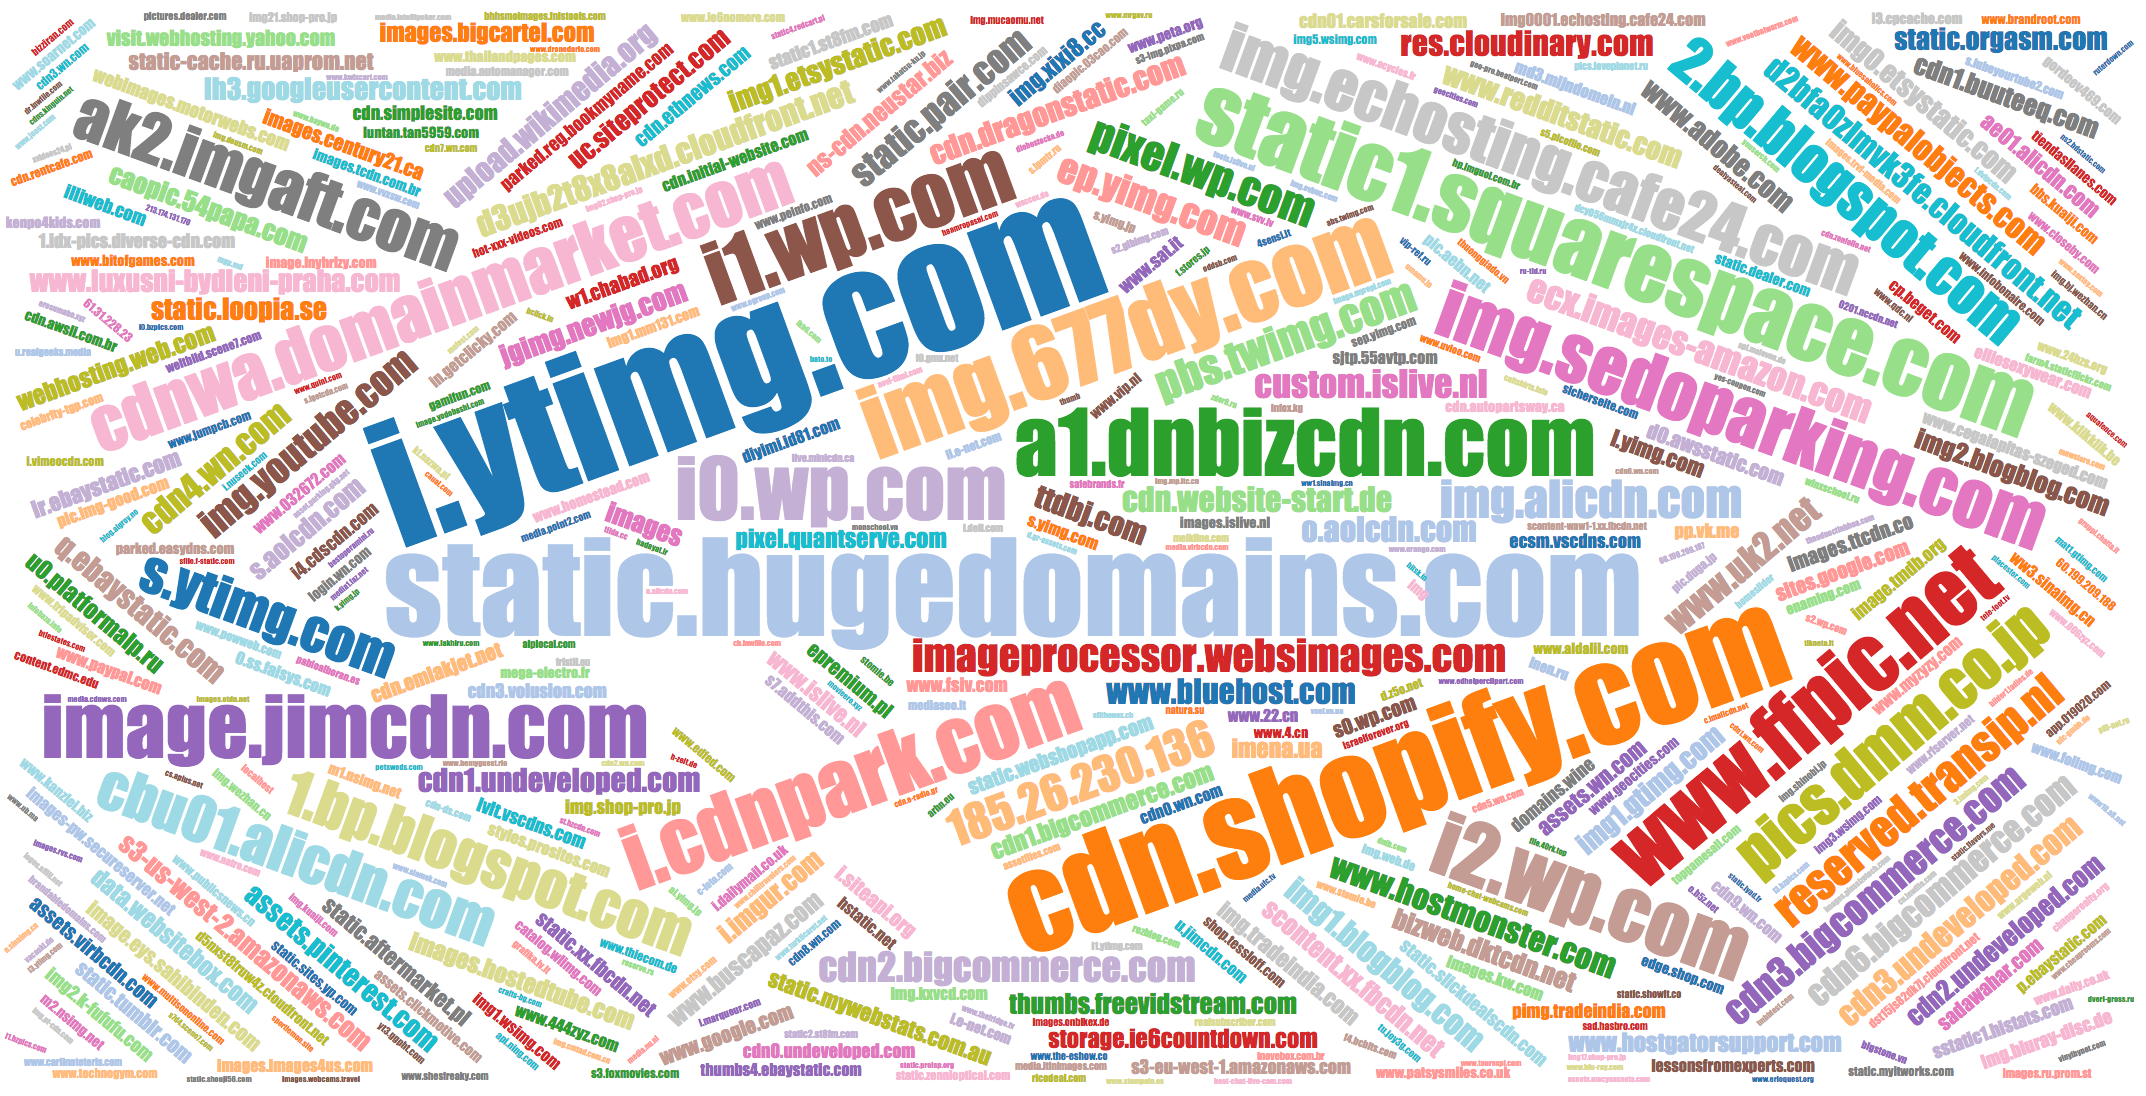 Popular names of IMG domains ns-cdn.neustar.biz, no-cache.hubspot.com, etc.